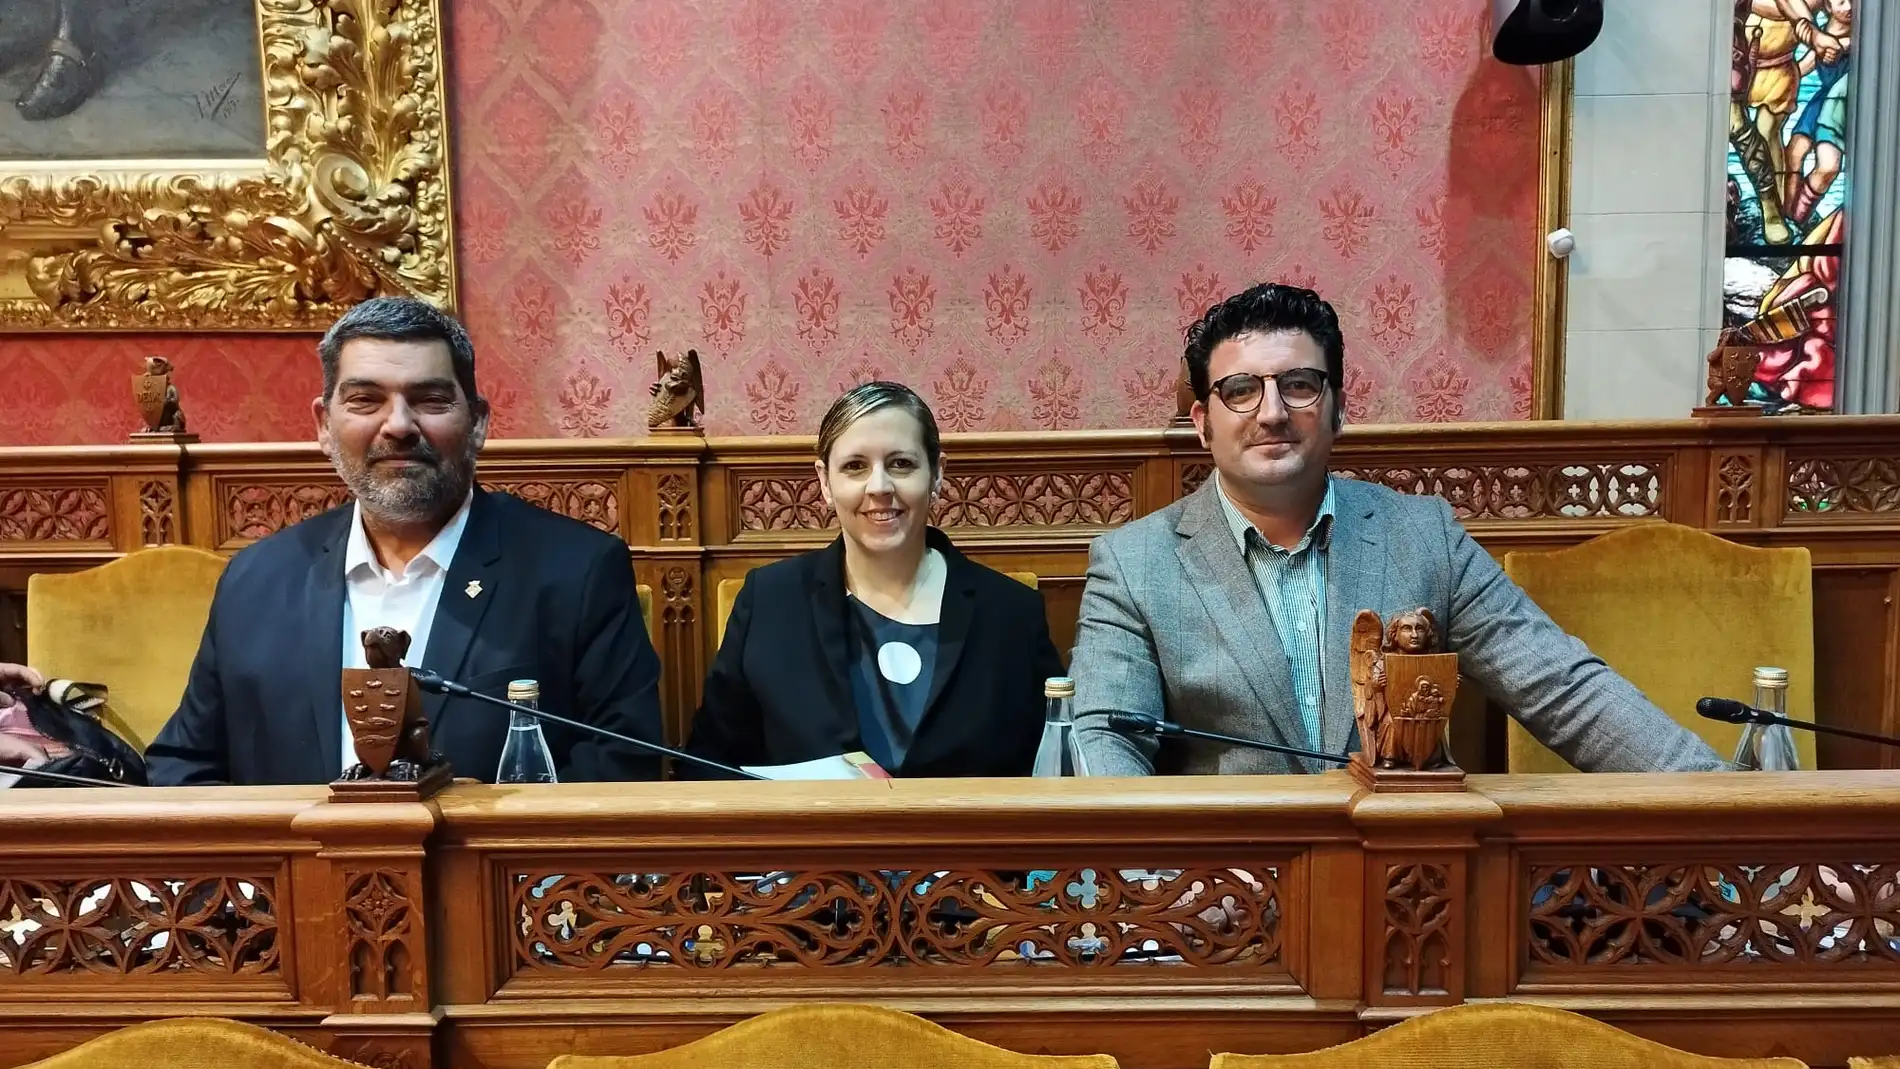 Pedro Bestard, Cristina Macías y Toni Gili, representantes de Vox en el Consell de Mallorca